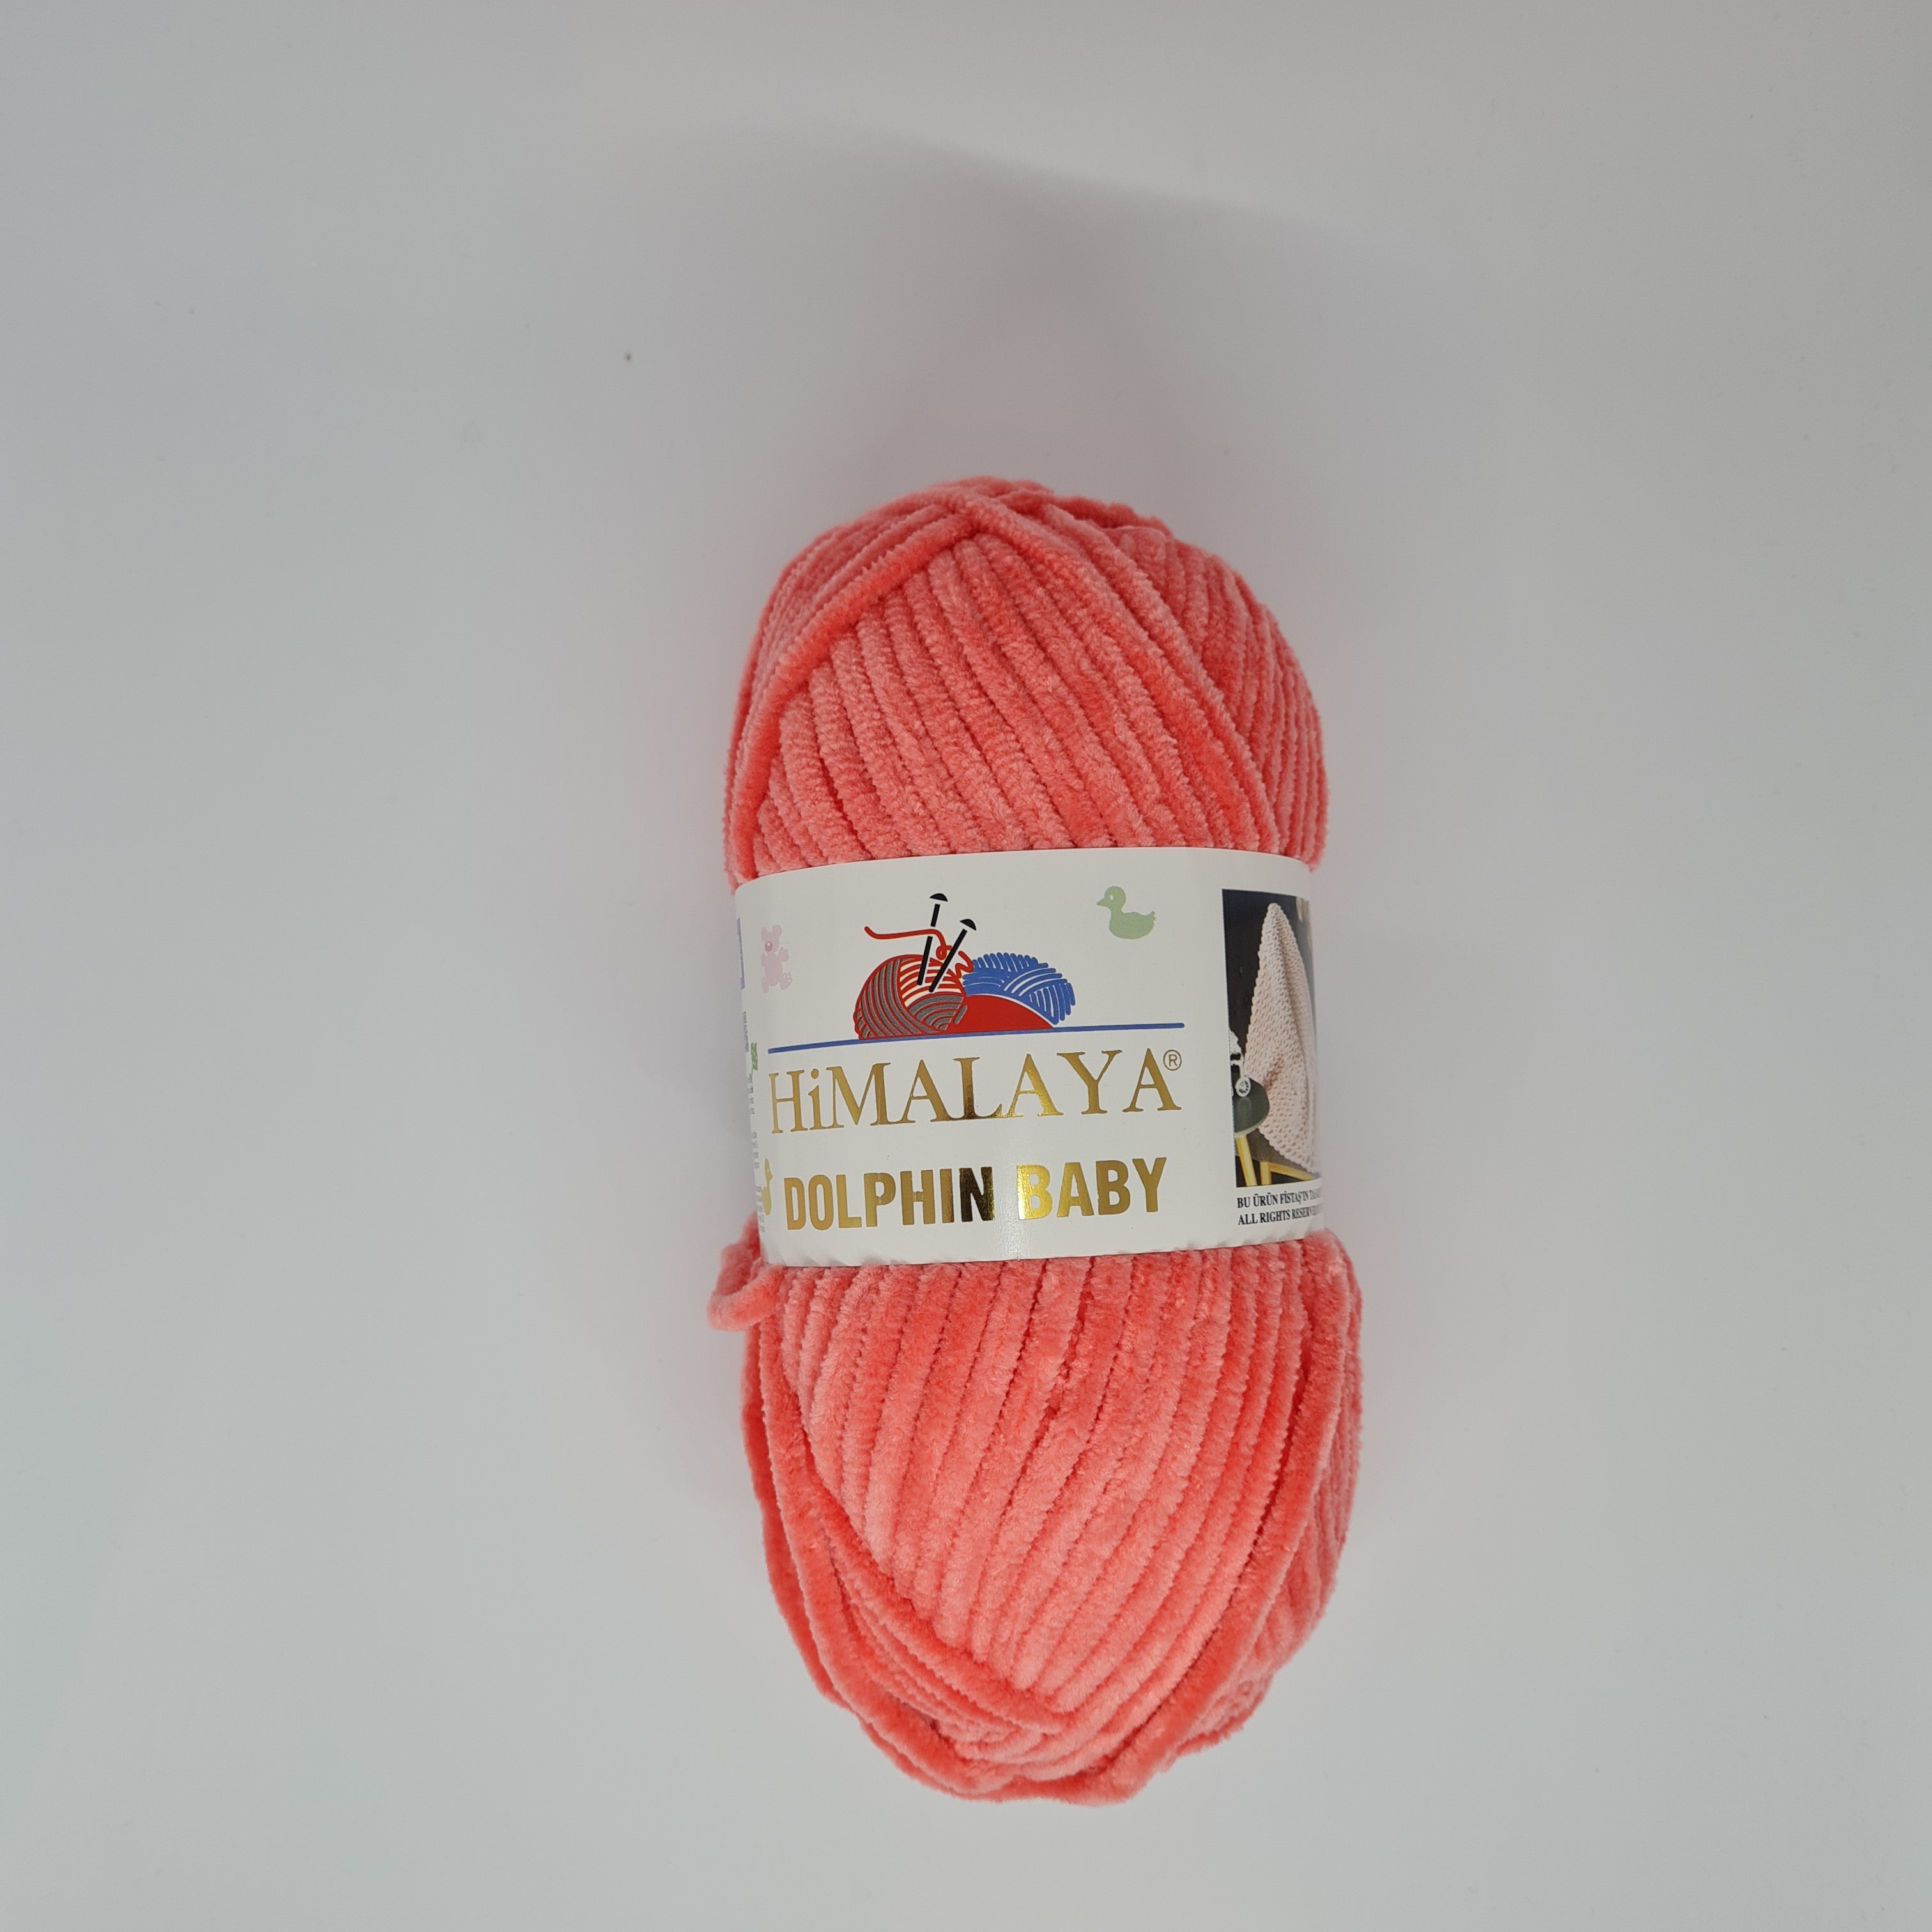 Himalaya Dolphin Baby 100gr 120mt- chenille yarn soft yarn for